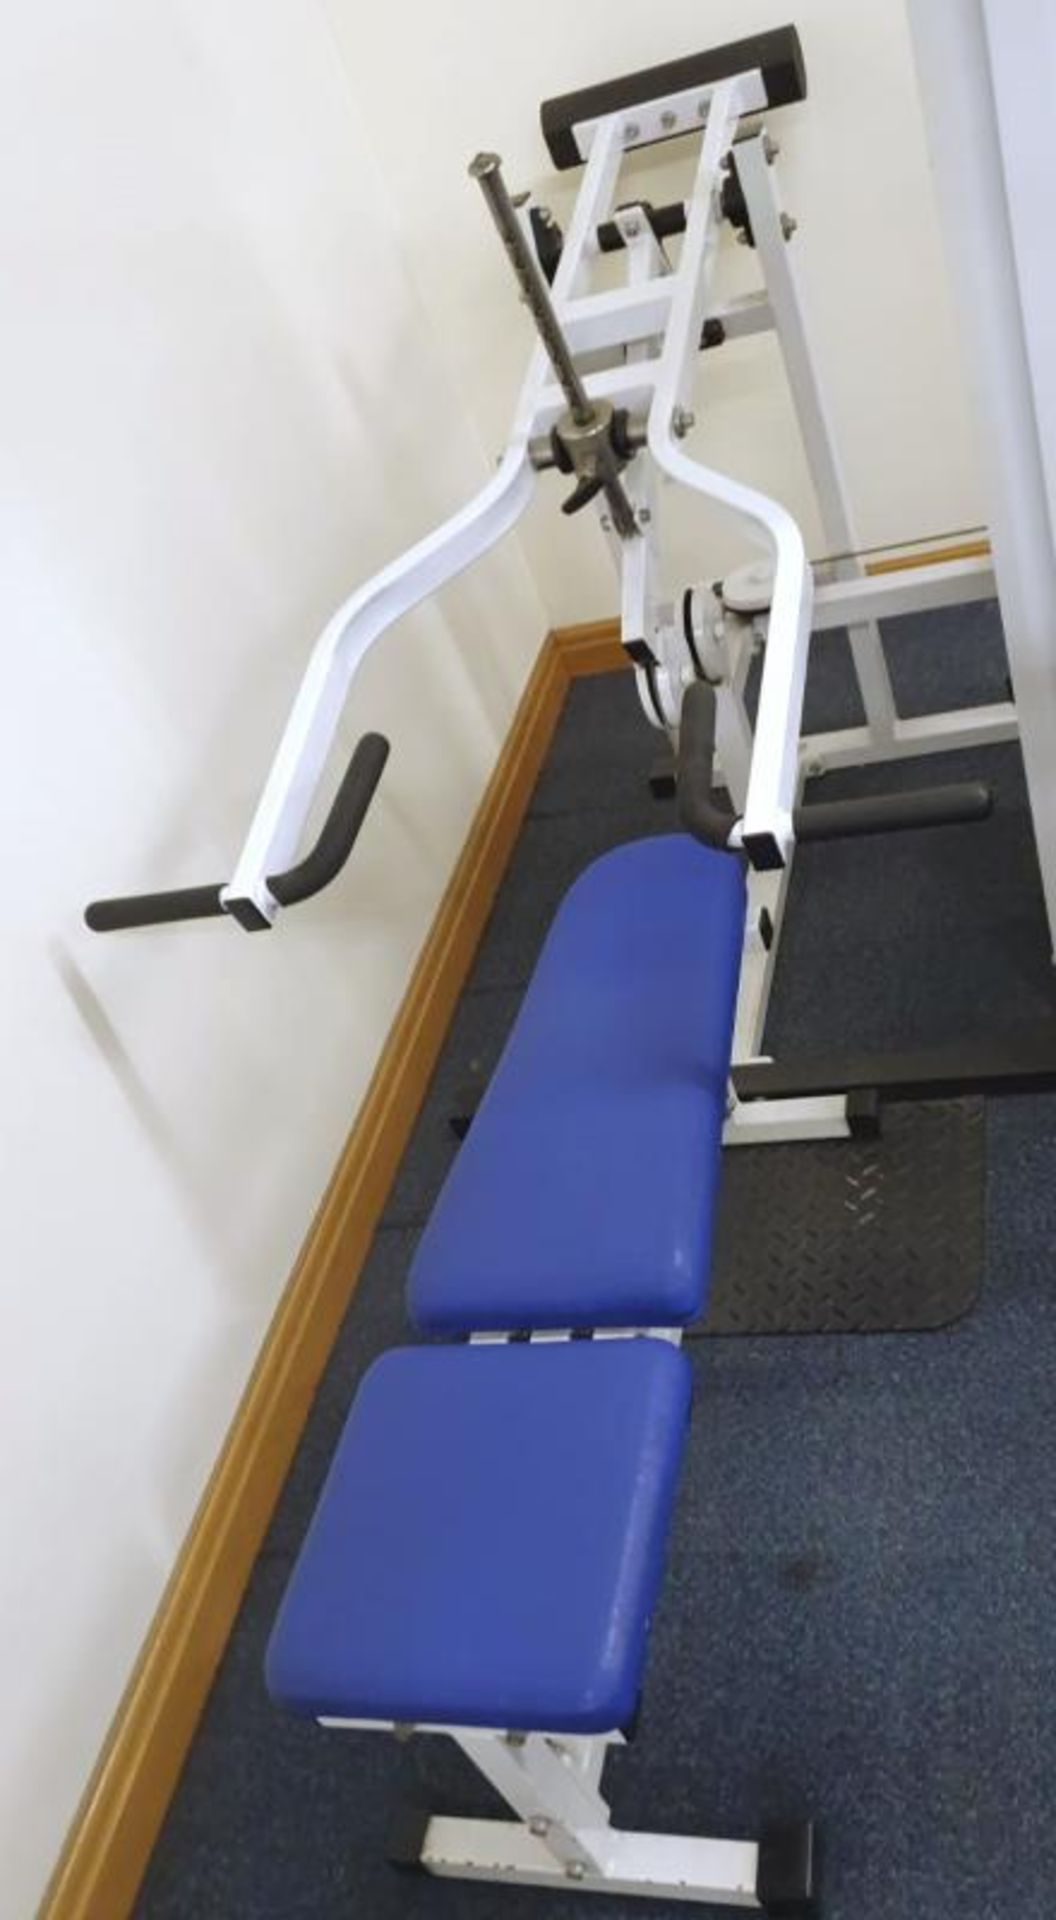 1 x Power Sport Guardian Bench Multi Press - Professional Gym / Sports Equipment - CL468 - Location: